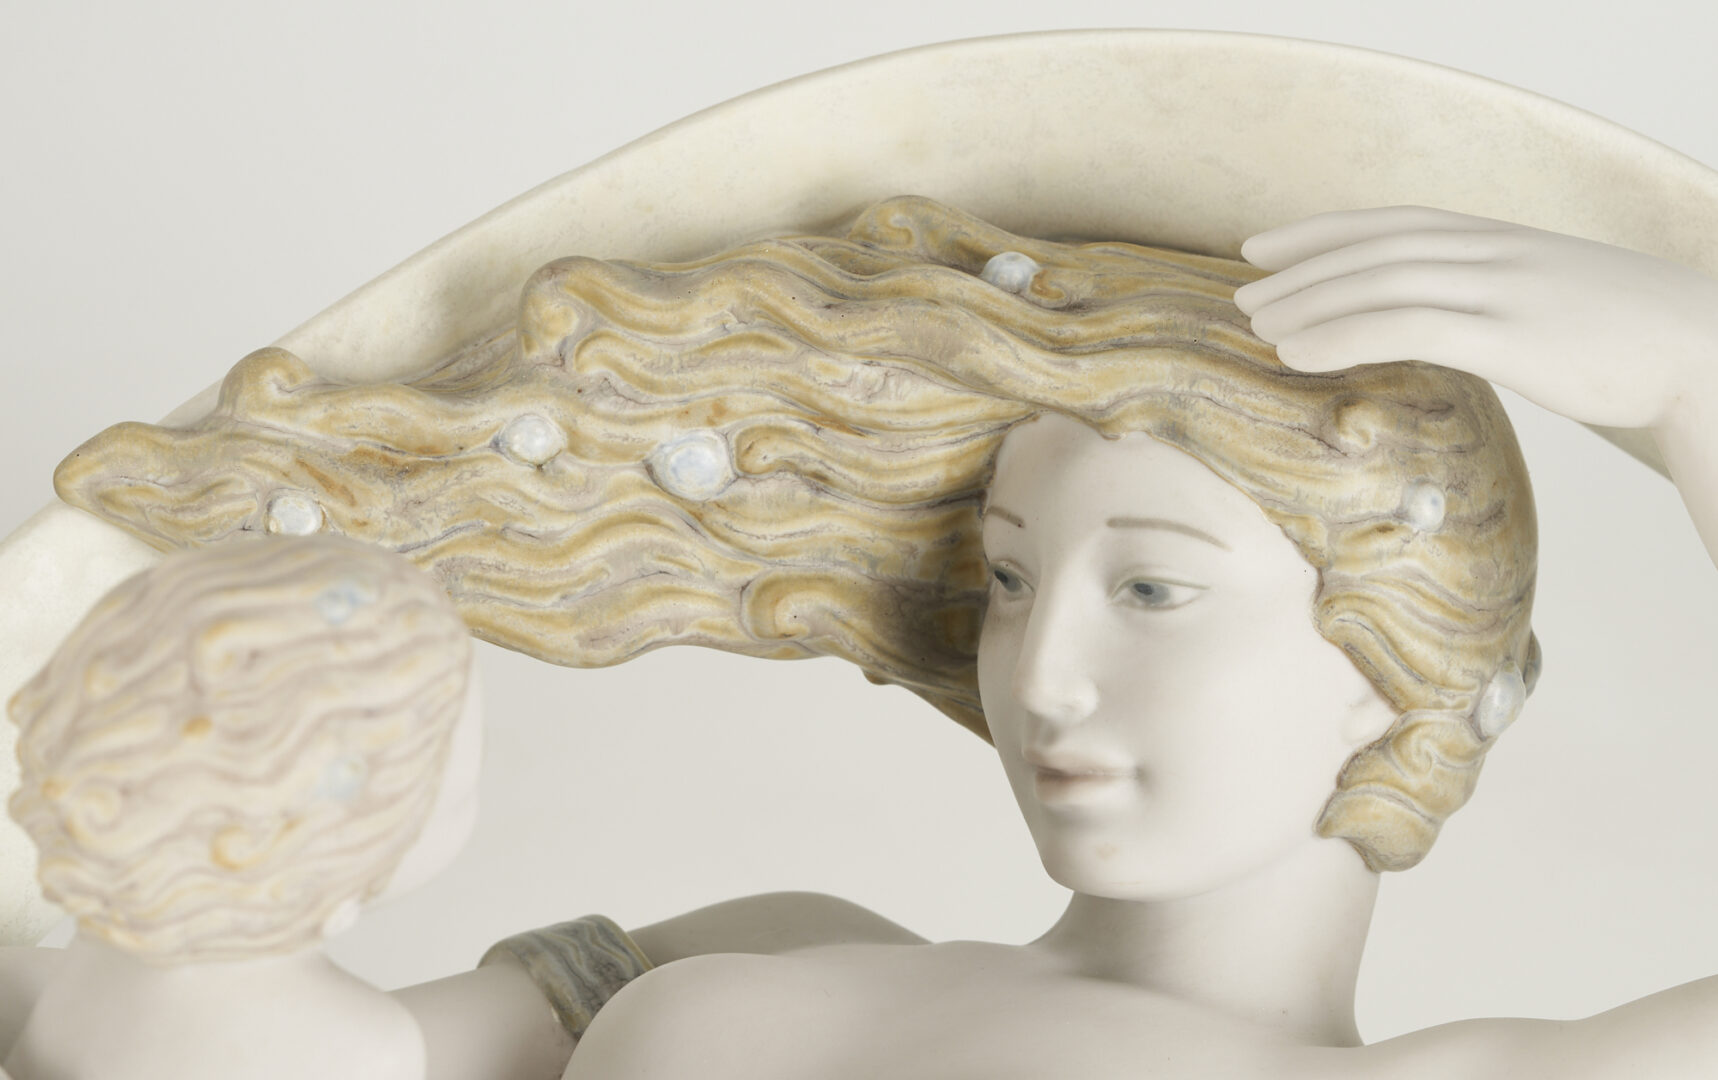 Lot 52: Lladro Porcelain Sculpture, The Flow of Life